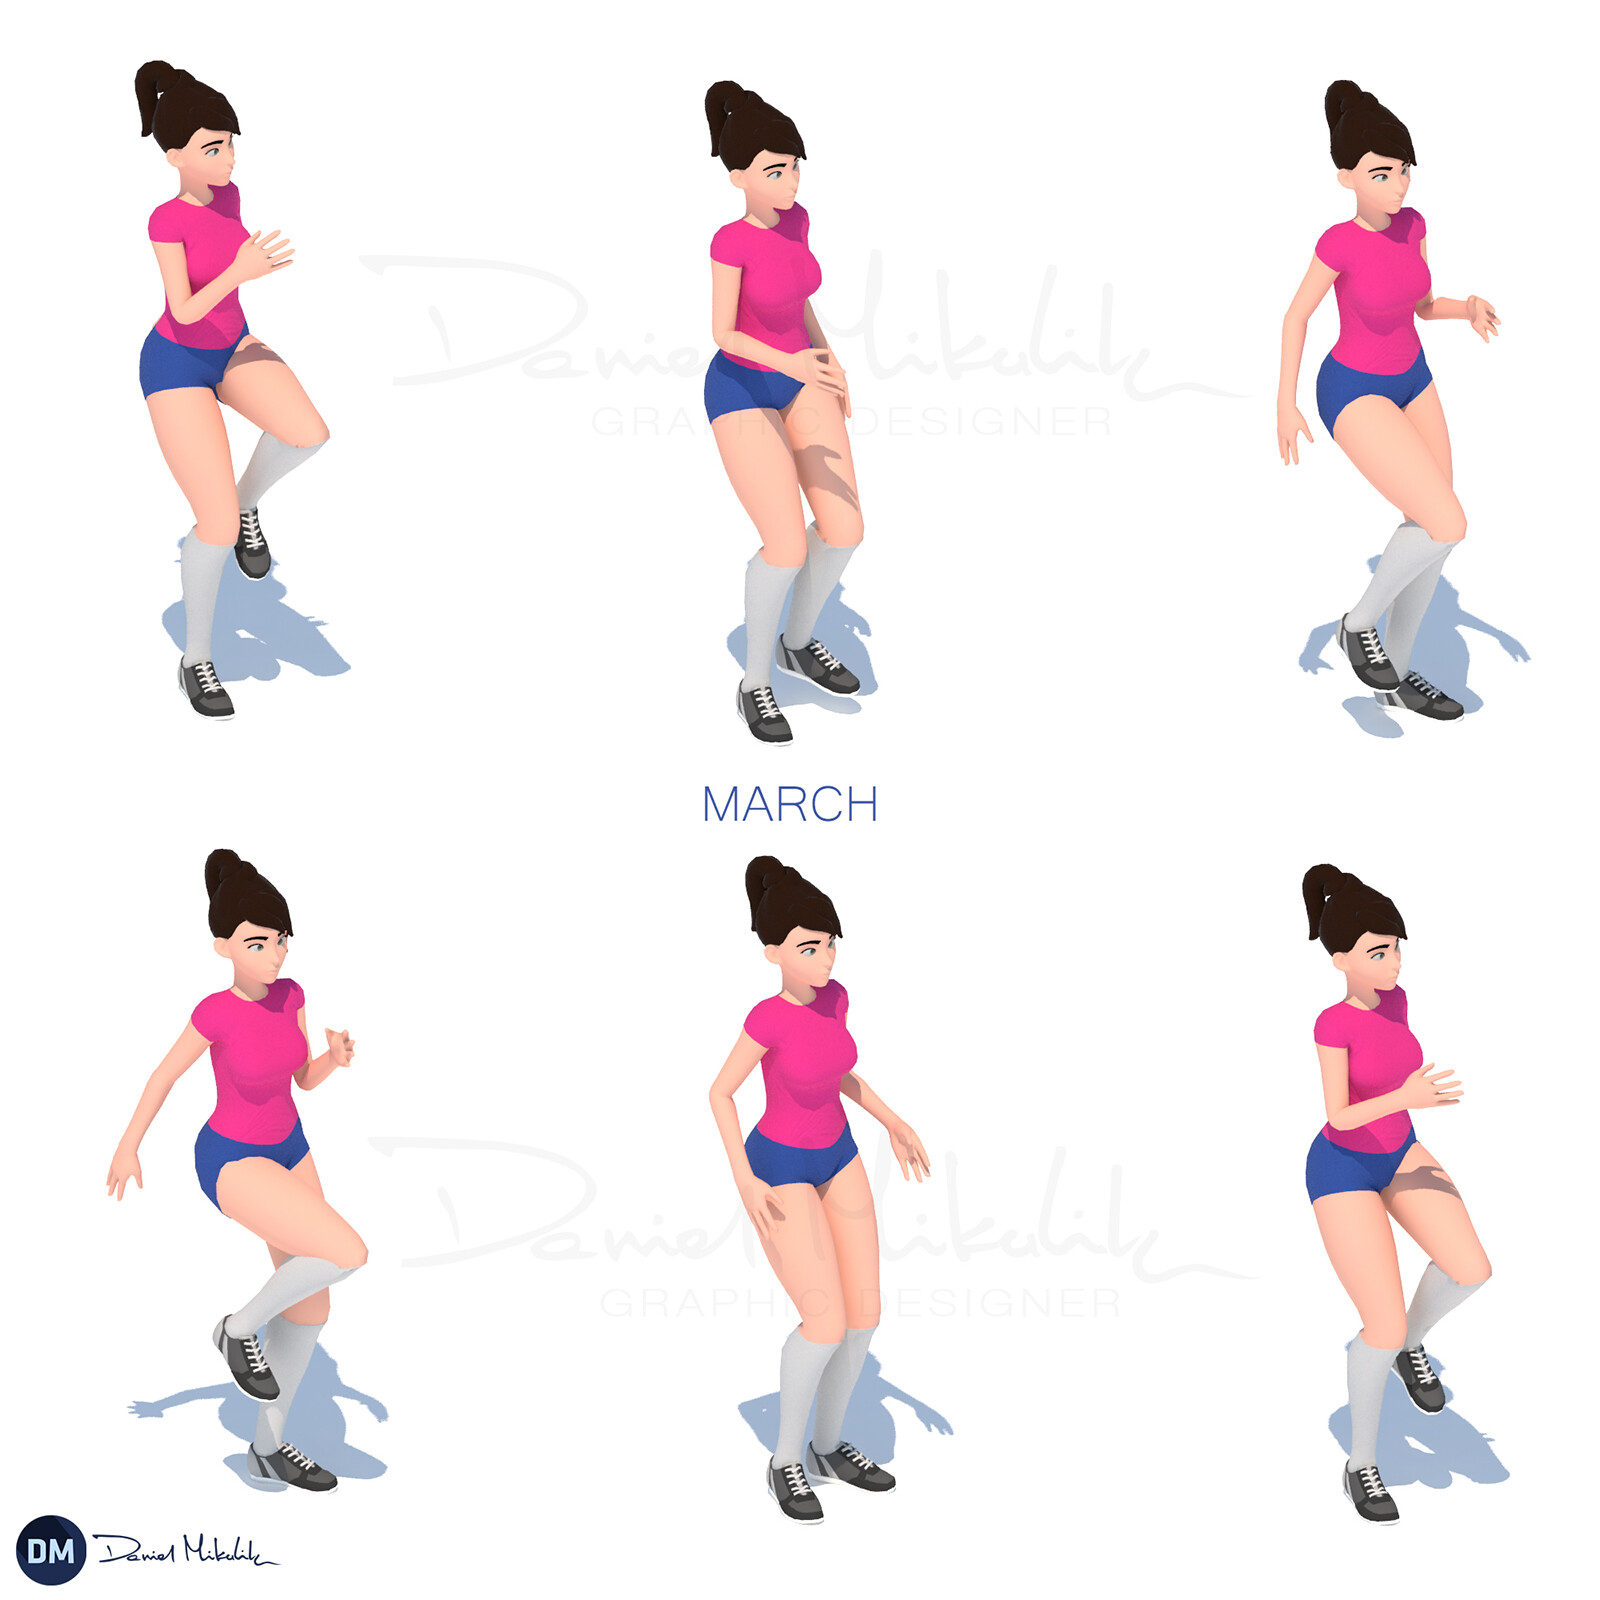 ArtStation - Cartoon Girl Exercise Animation Bundle